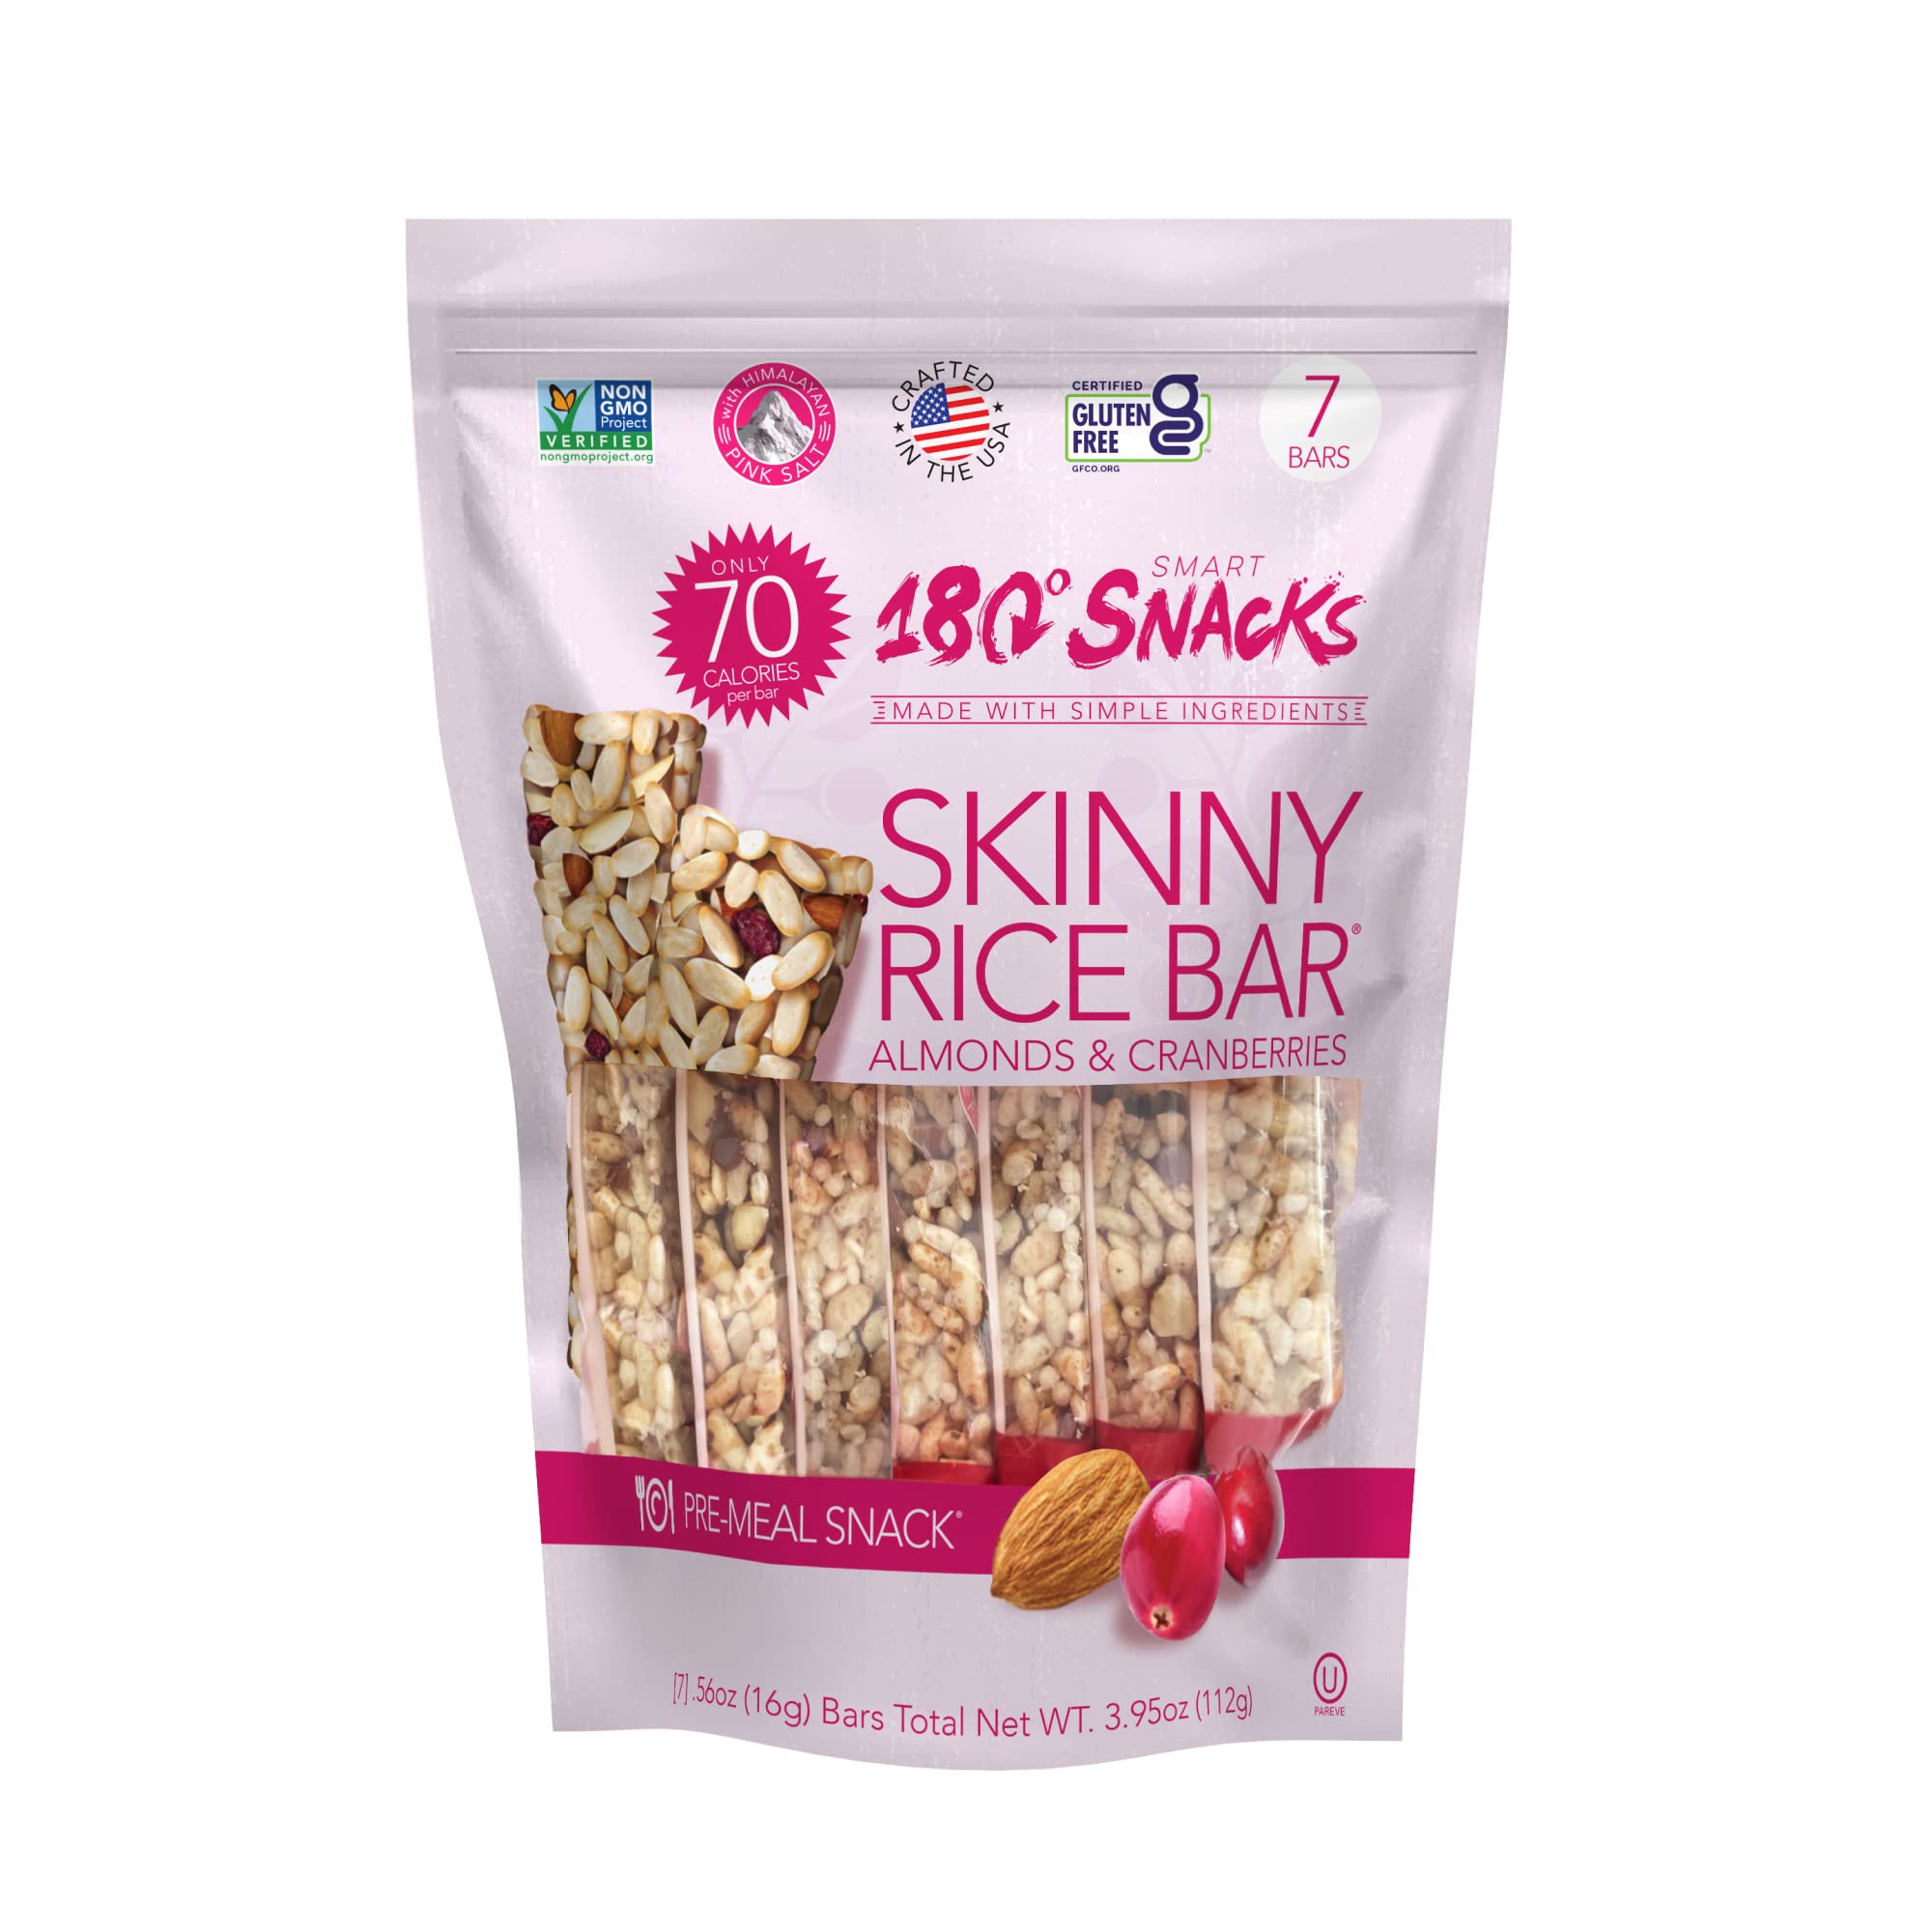 180 Snacks Skinny Rice Bar: Calories, Nutrition Analysis & More